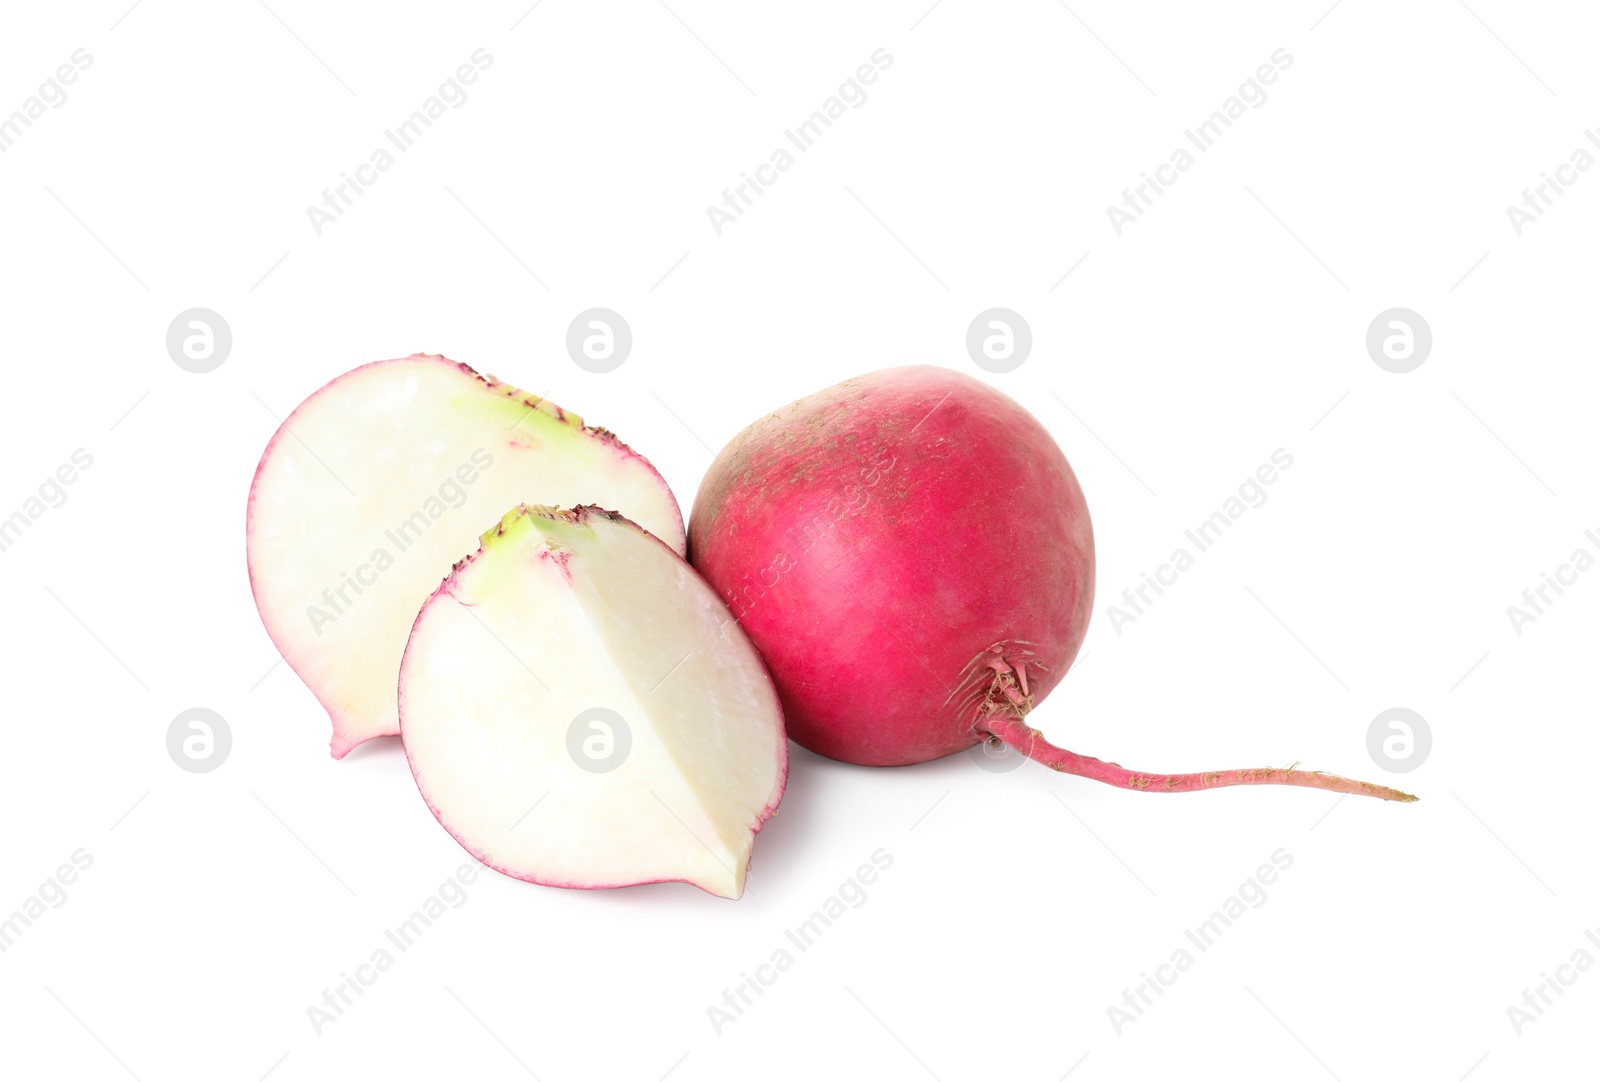 Photo of Cut and whole fresh ripe turnips on white background